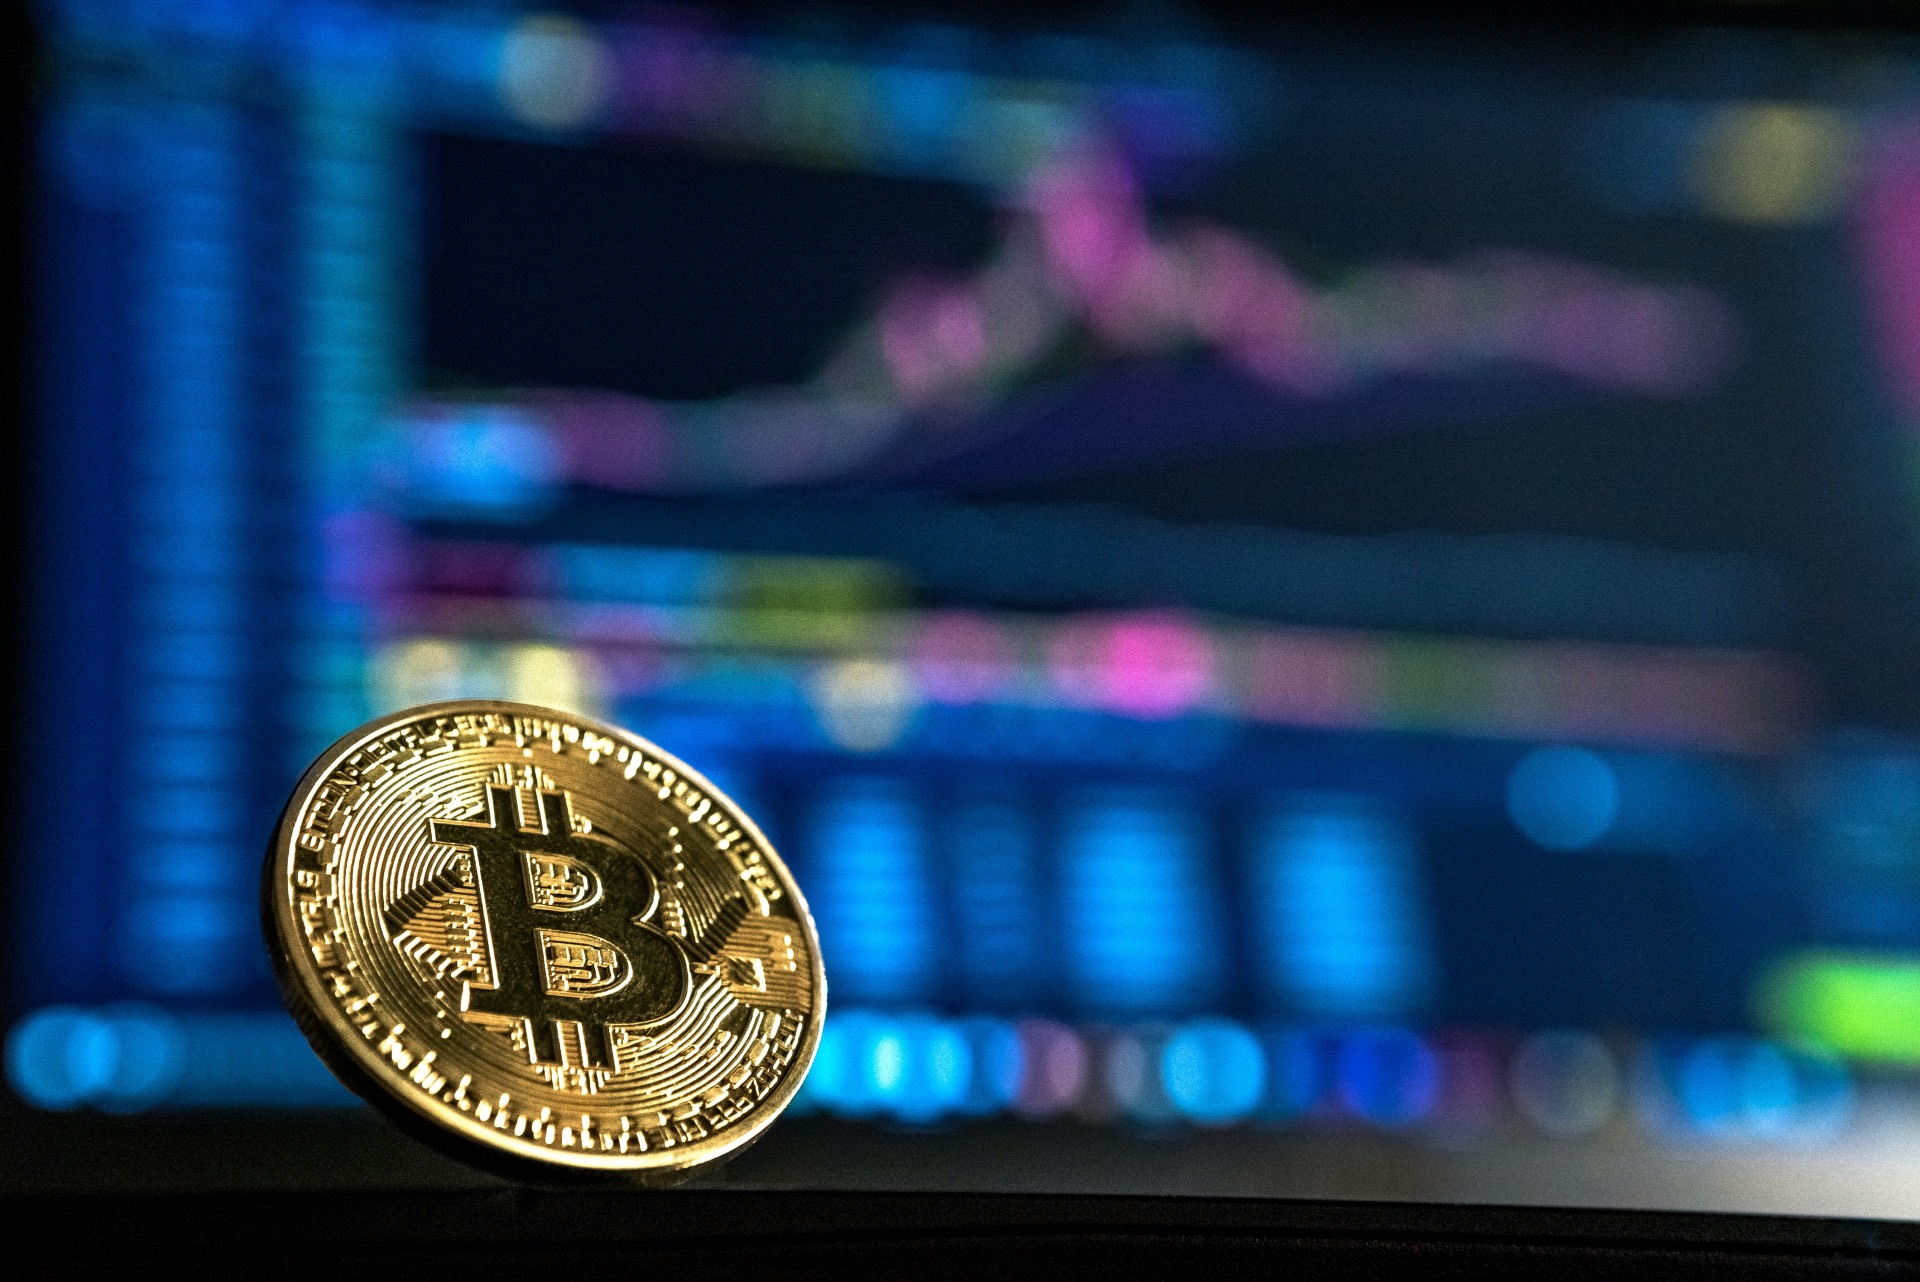 Buckle Up: Bitcoin Set To Smash $150,000 Mark, Says Trading Guru – Here’s When